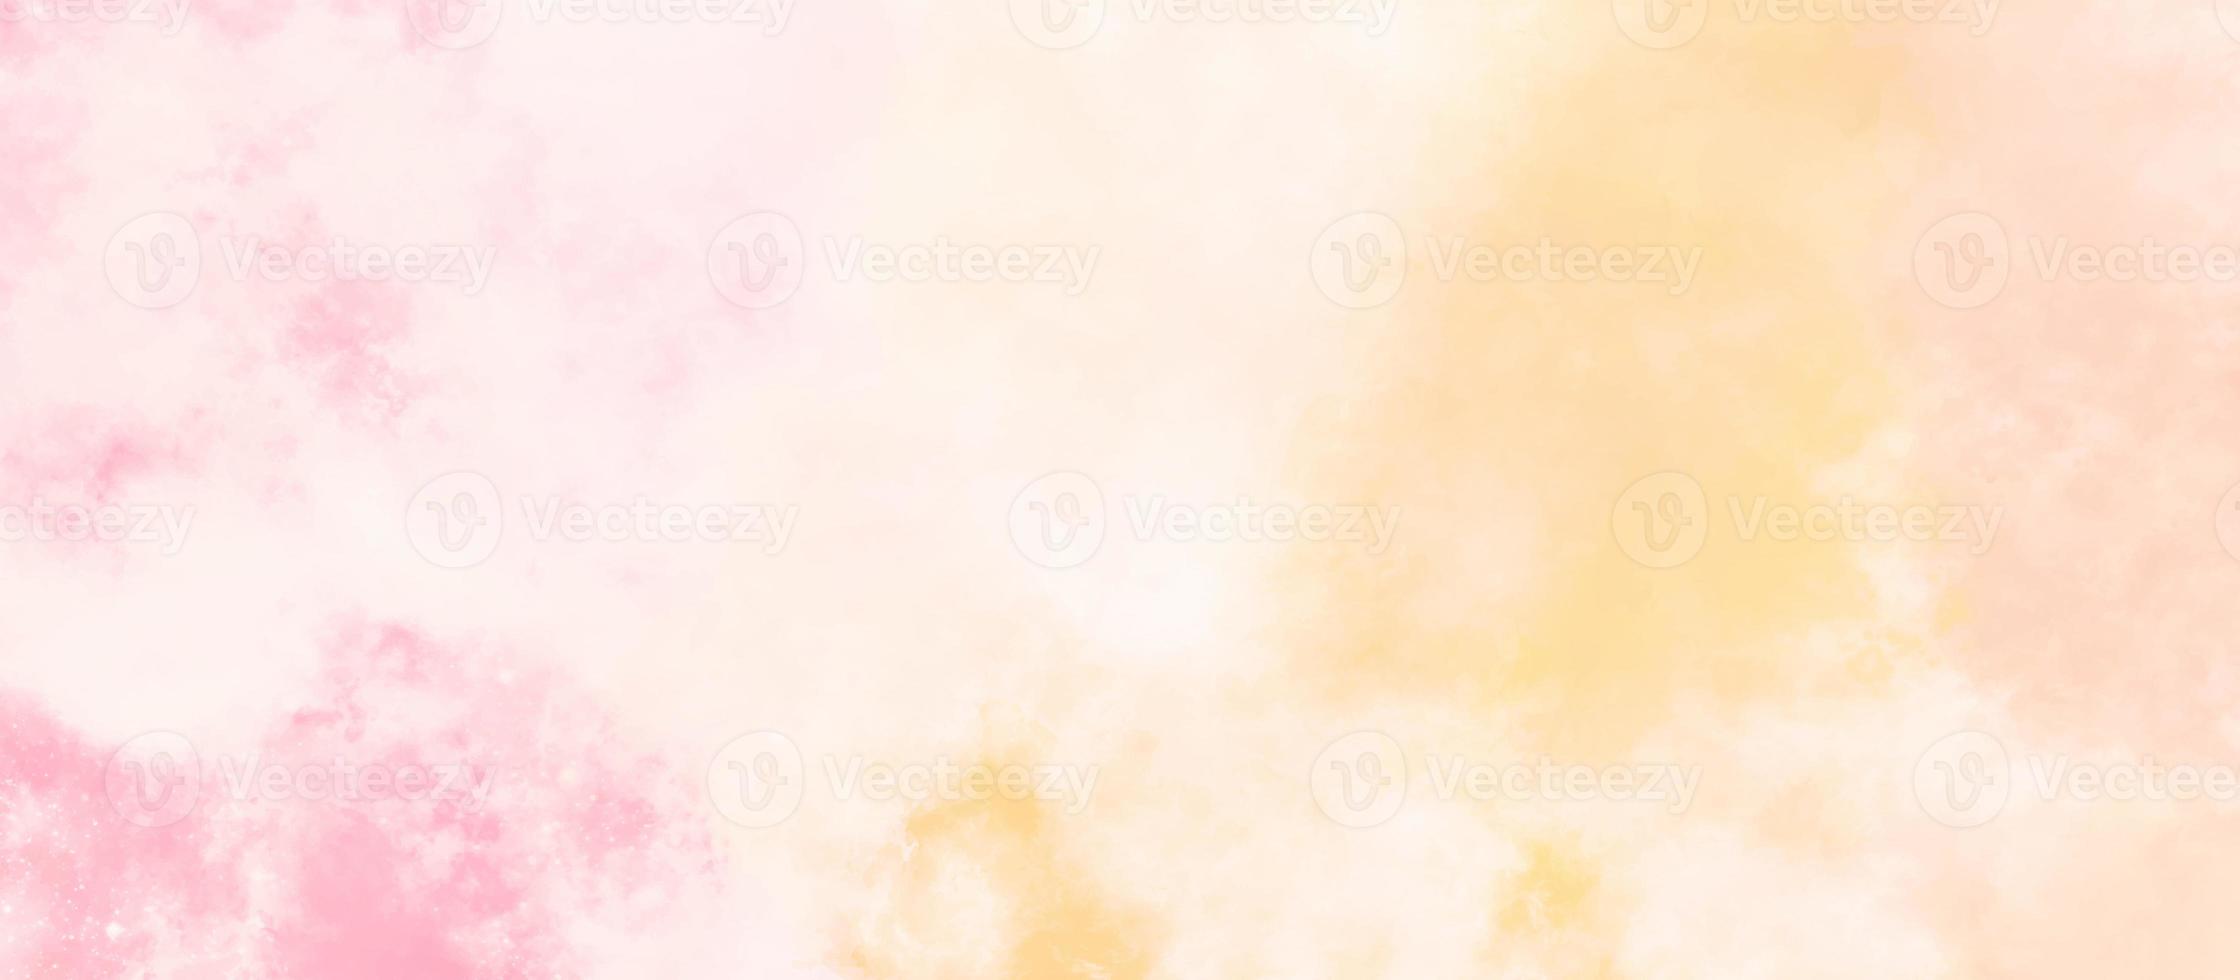 roze achtergrond met ruimte. fantasie glad licht roze waterverf papier getextureerd. zacht roze waterverf achtergrond voor uw ontwerp, waterverf achtergrond concept foto